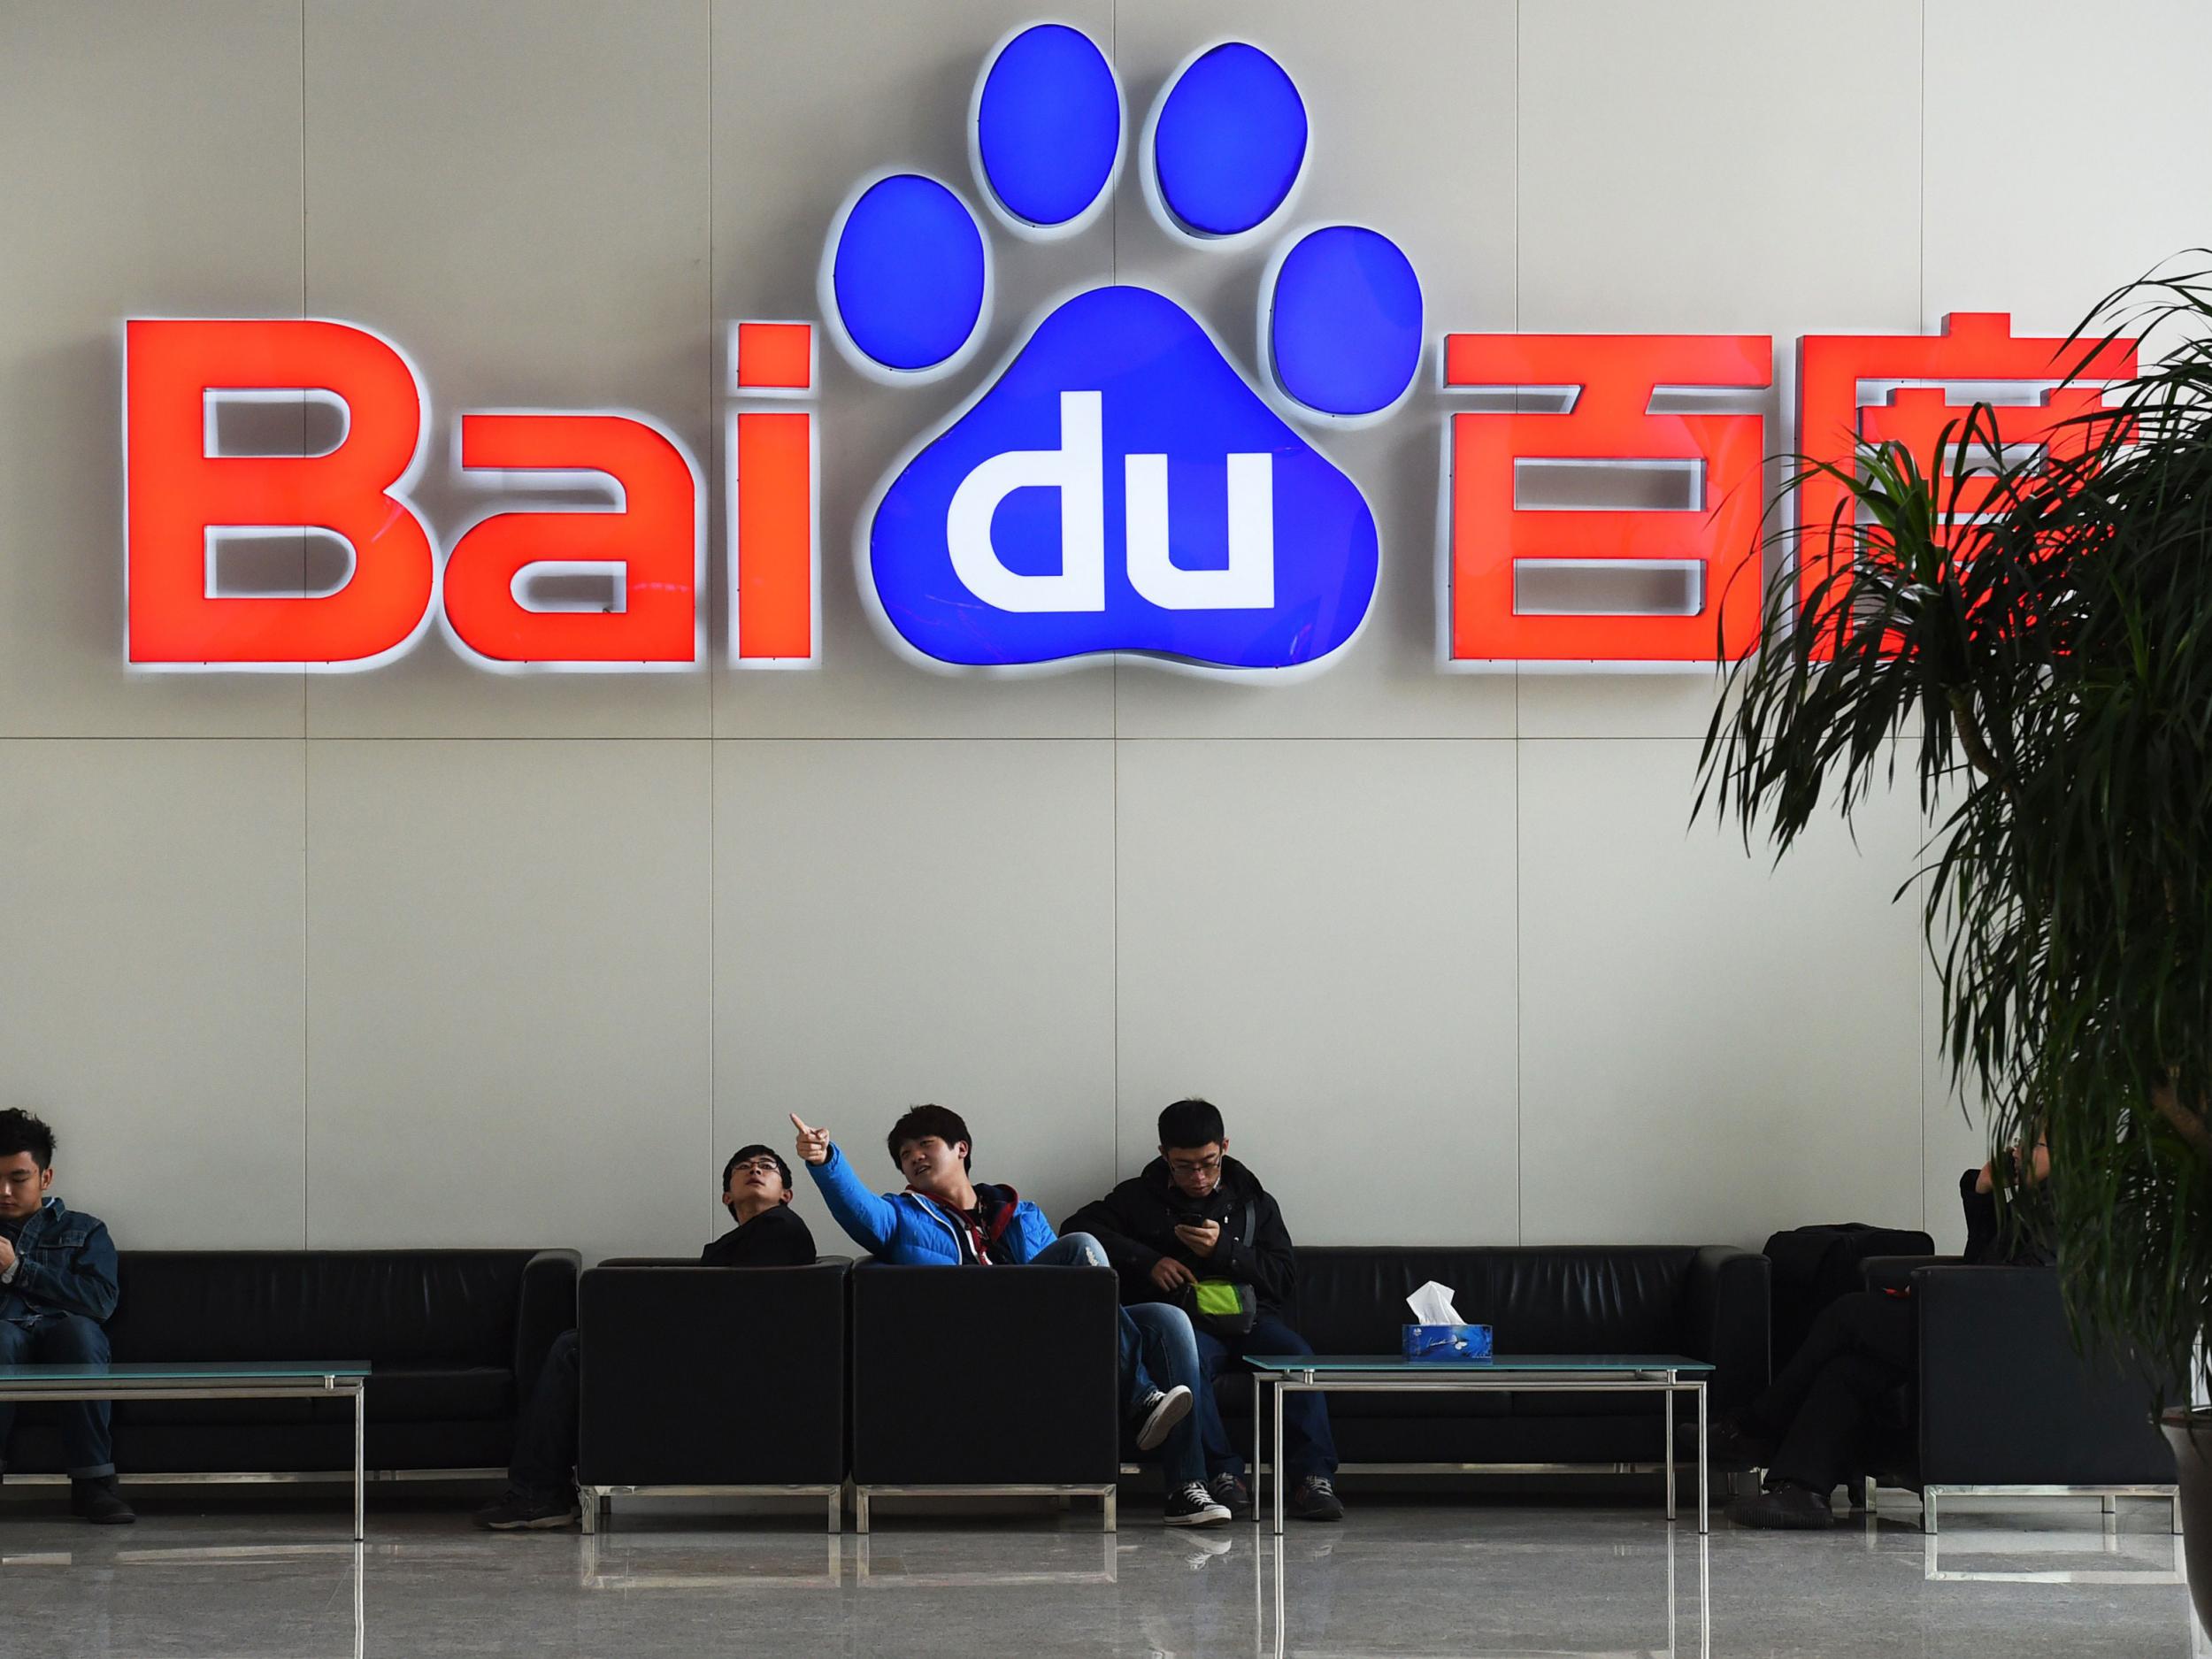 Baidu is one of China's biggest internet companies